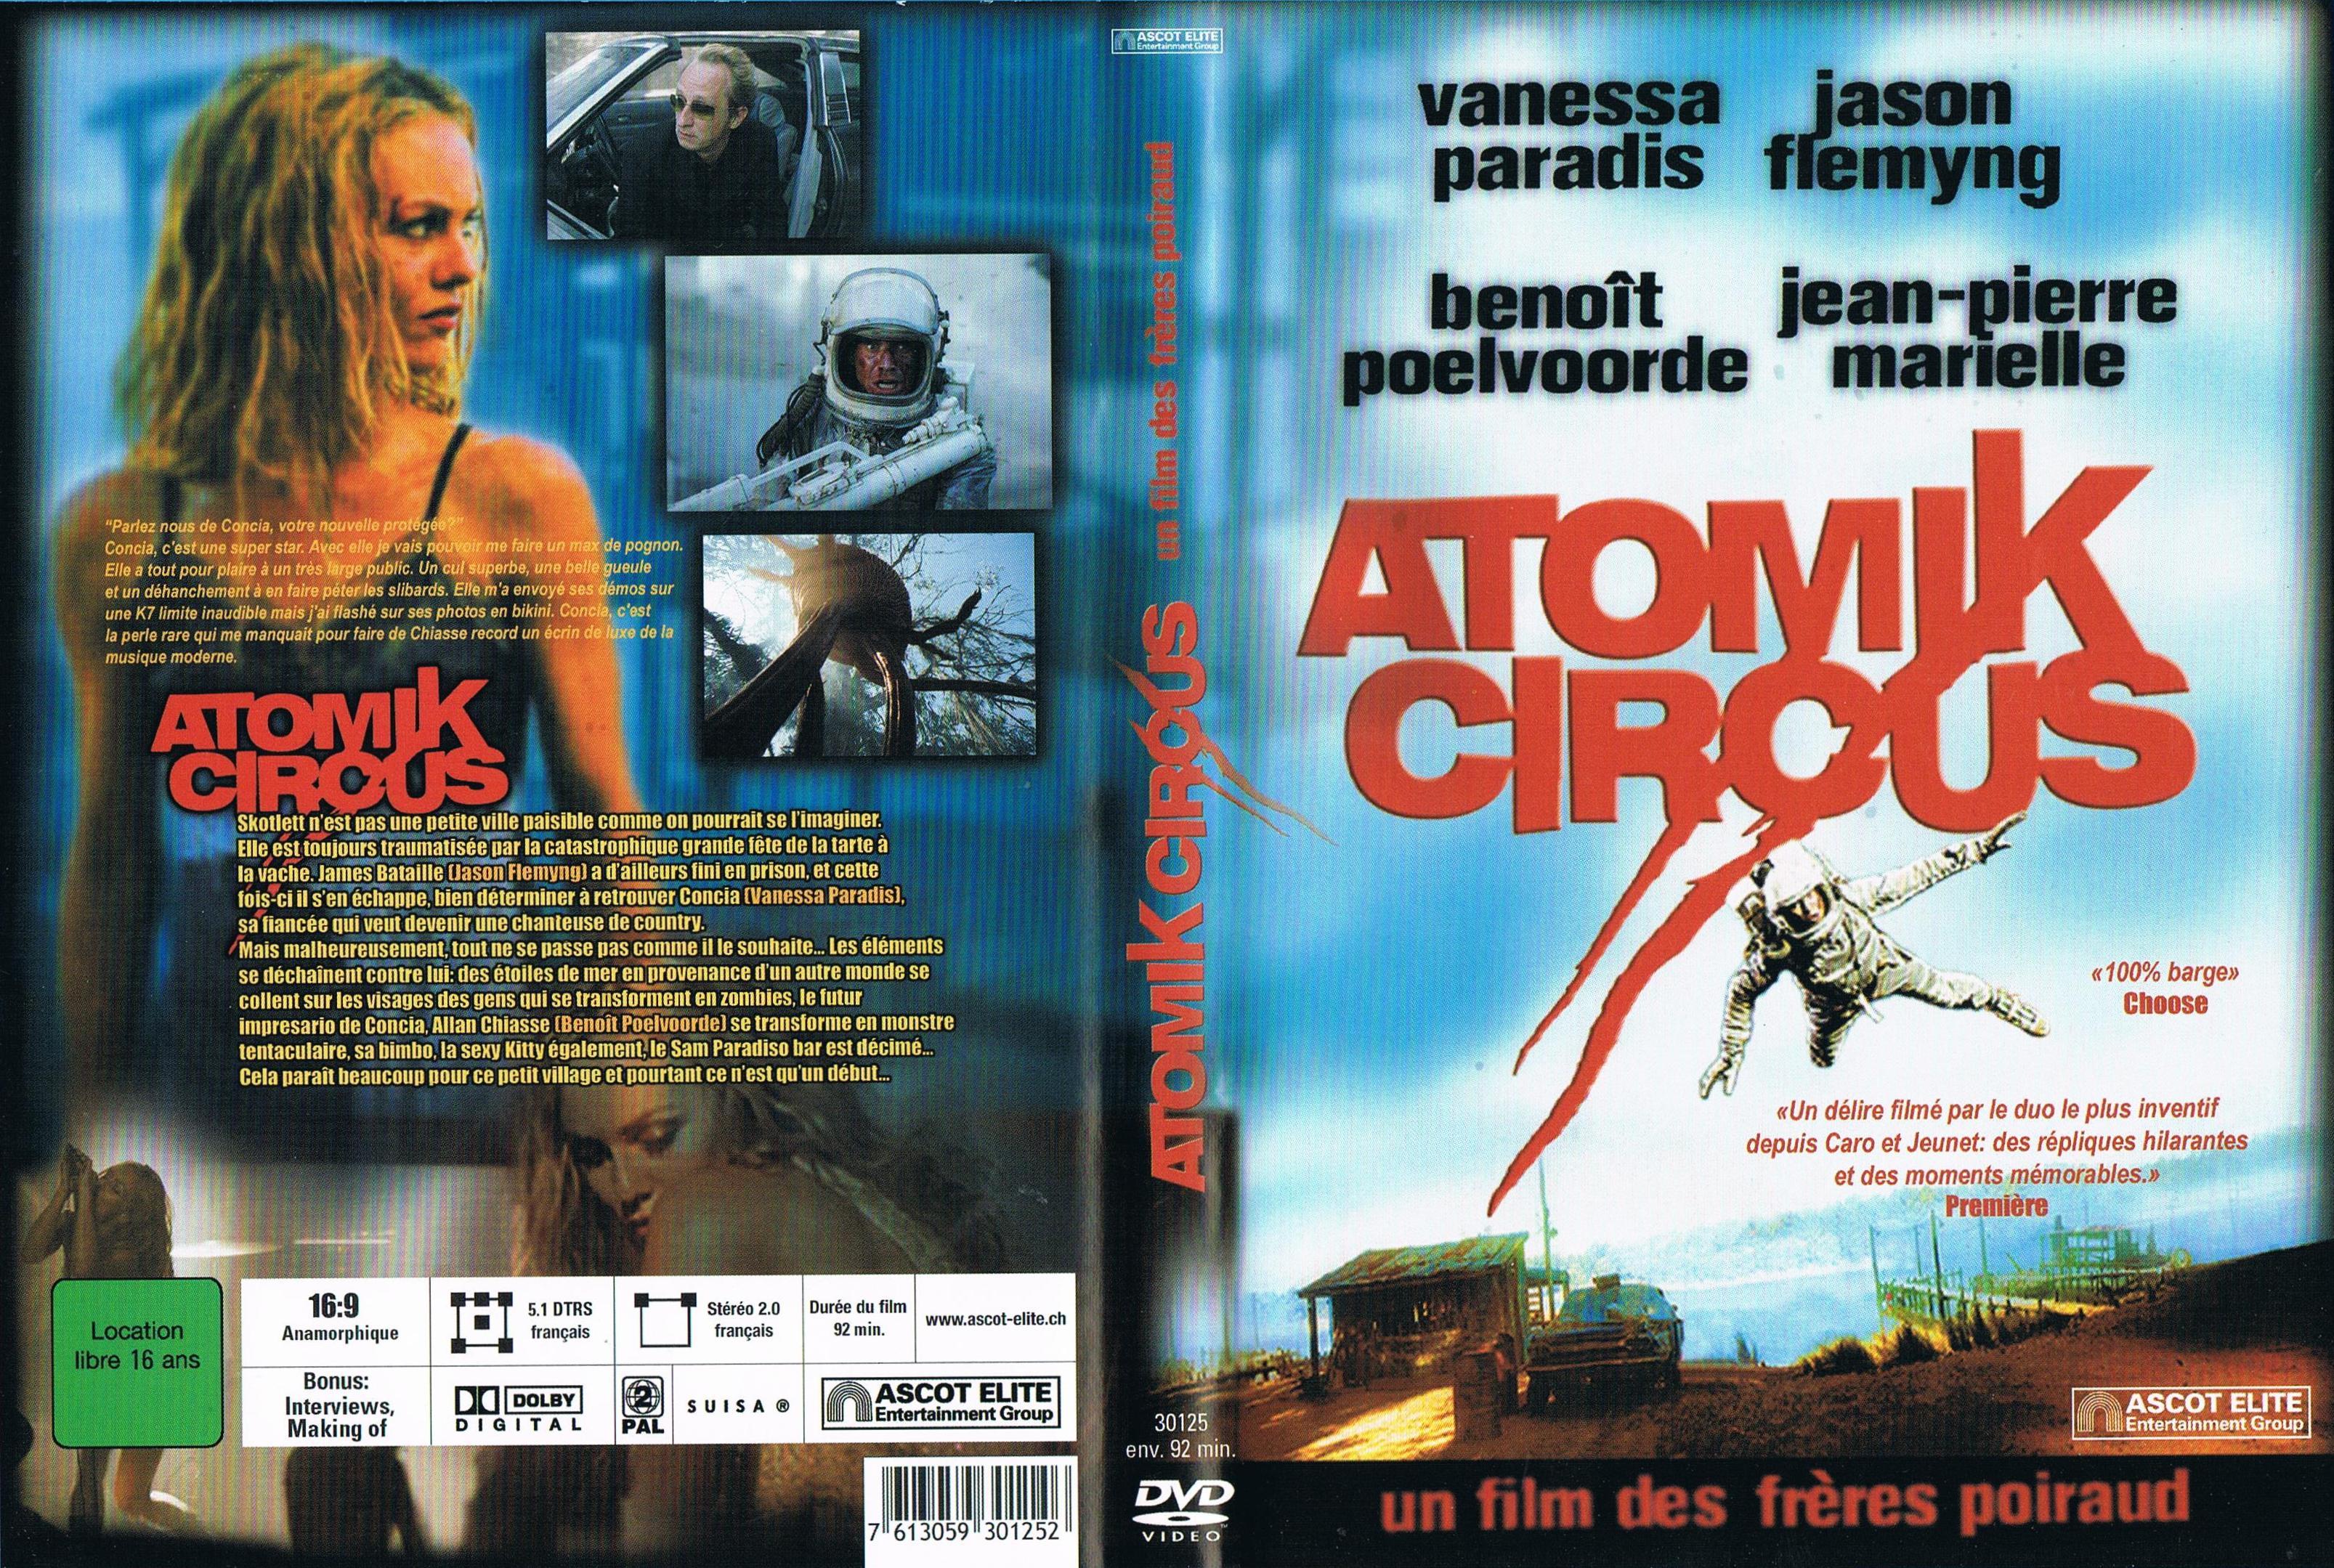 Jaquette DVD Atomik circus v4